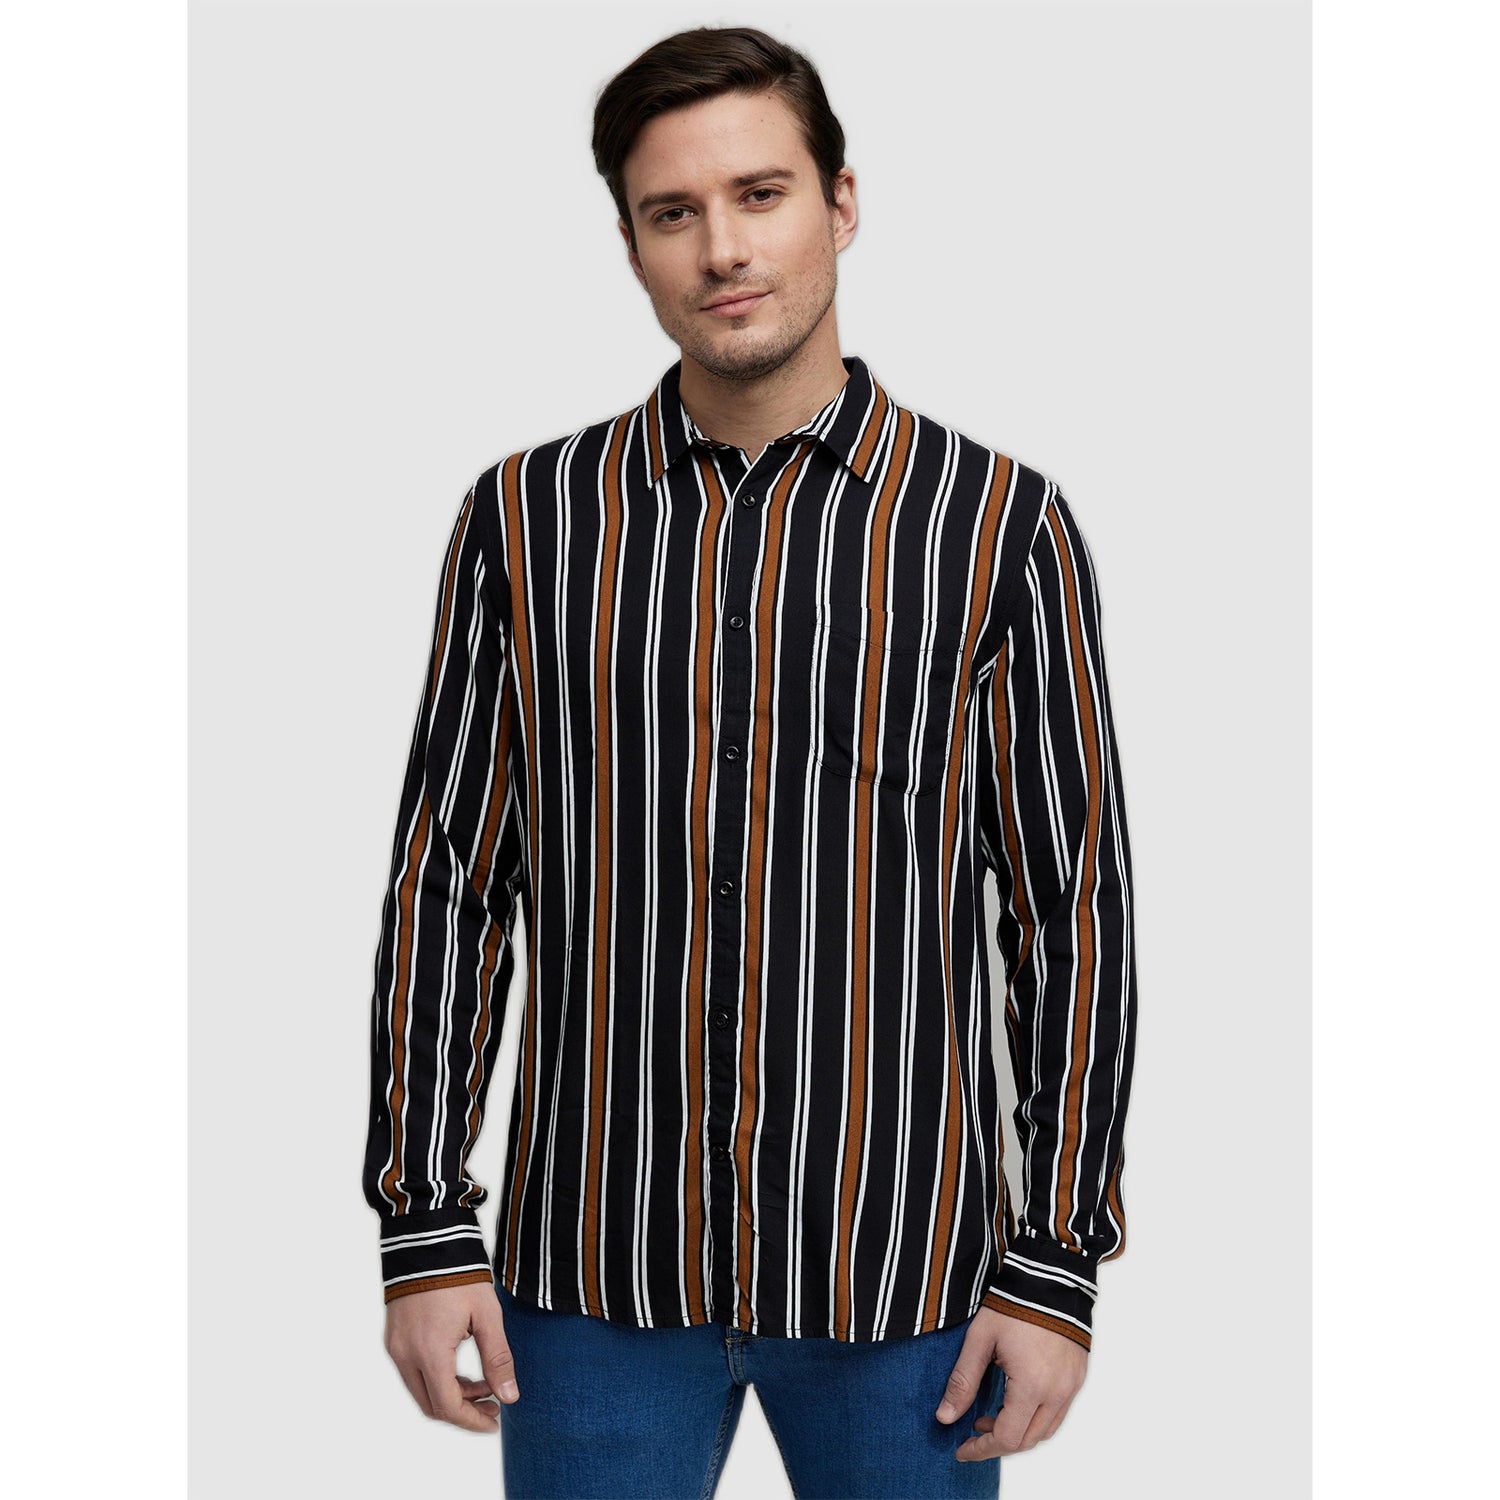 Black Striped Long Sleeves Classic Casual Shirt (CAVISLINE)